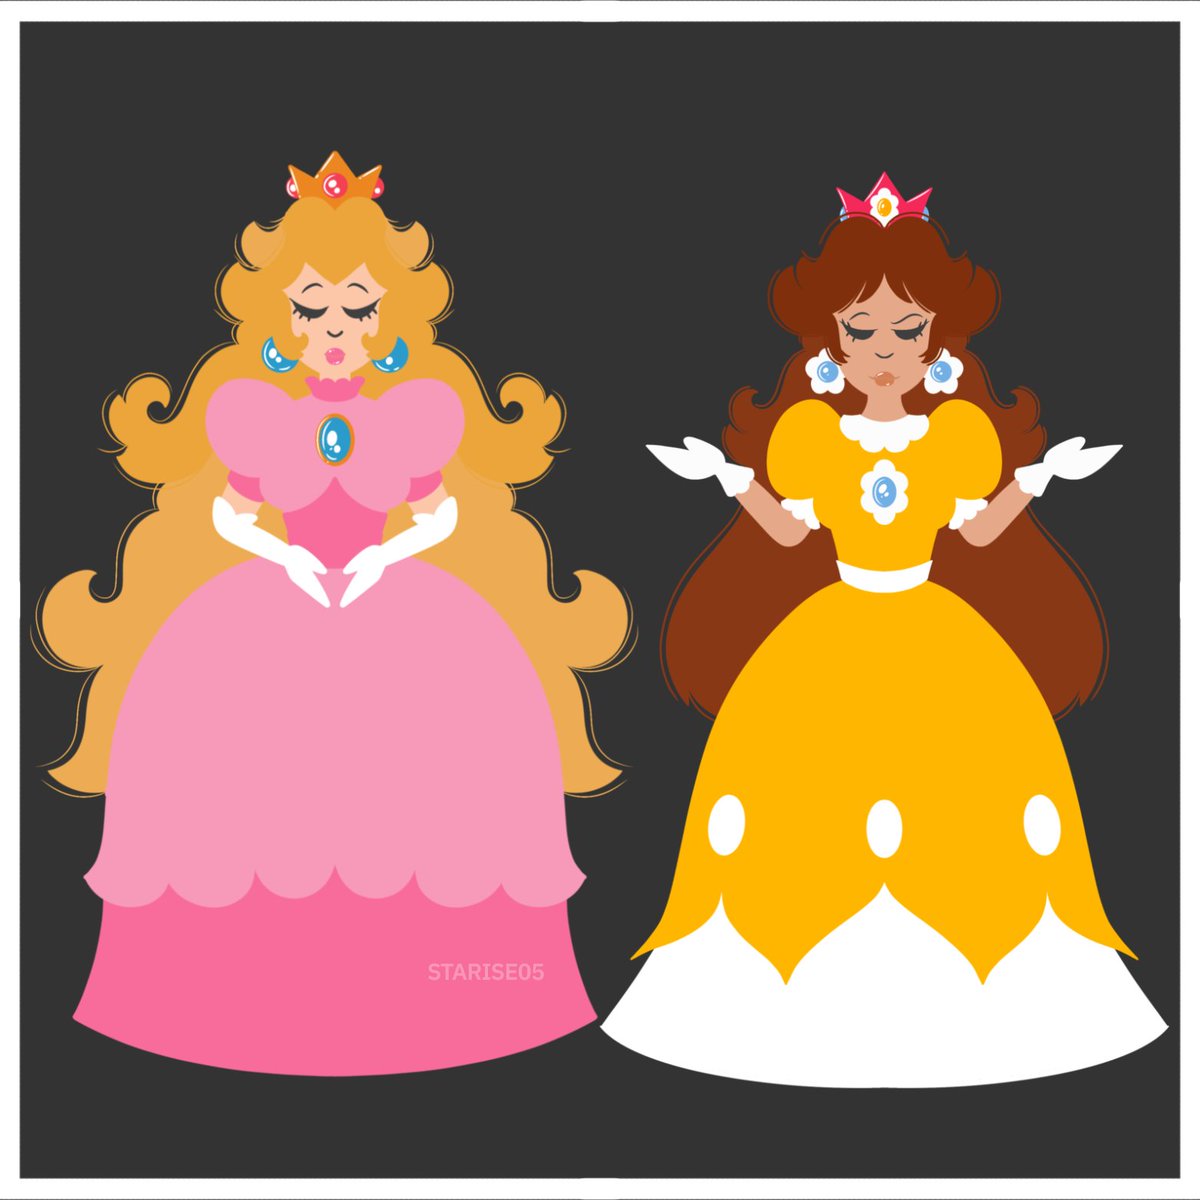 The classic girls together again!

#PrincessPeach #PrincessDaisy #Nintendo